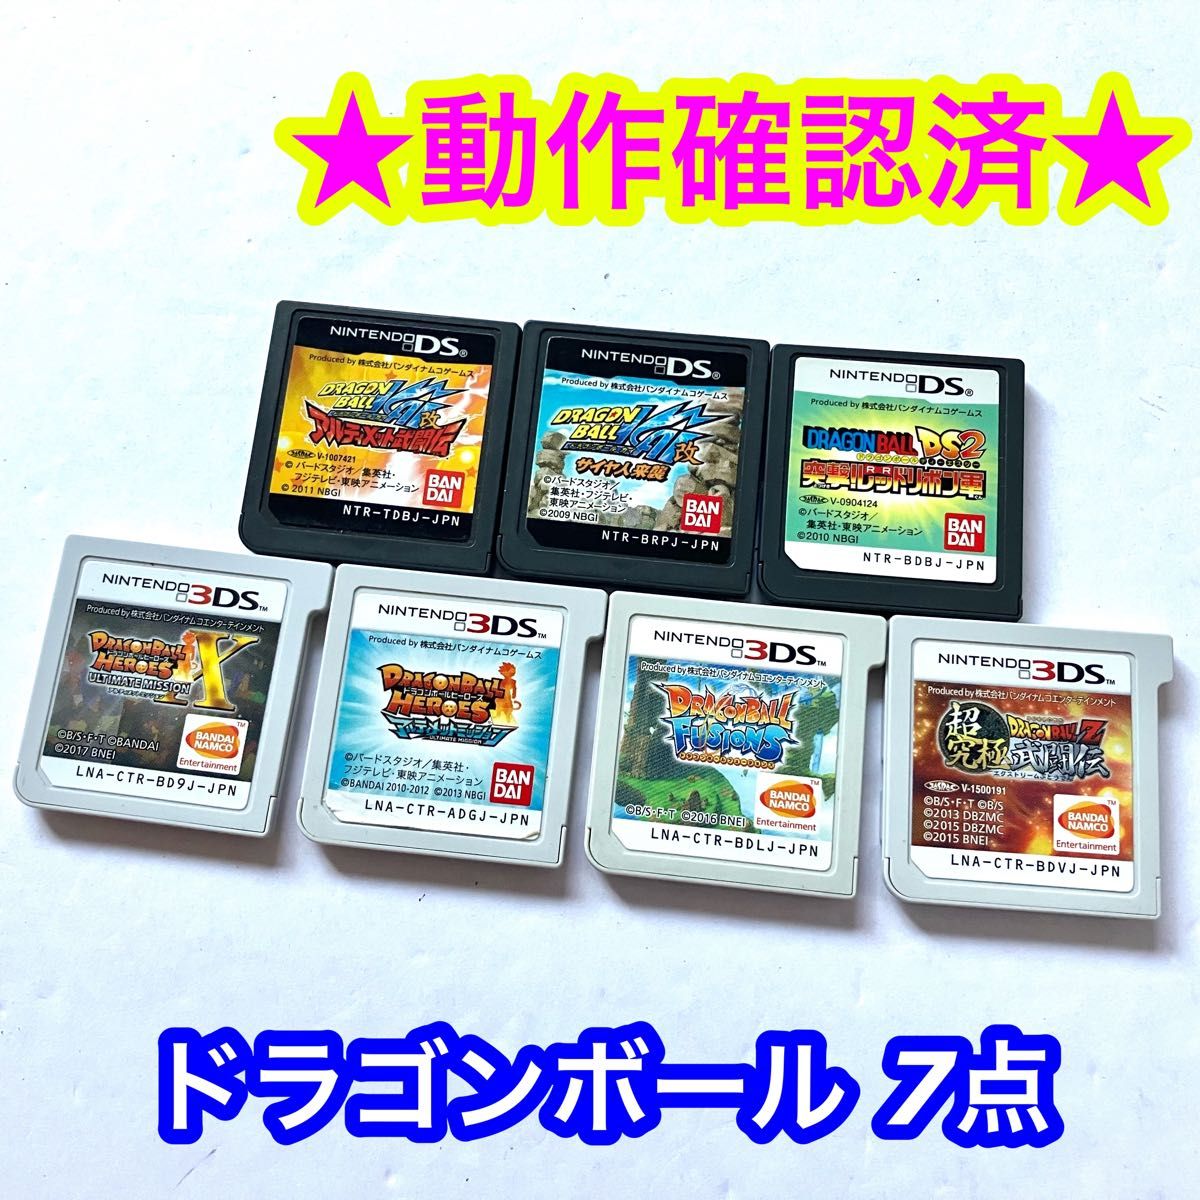 3DS DS ドラゴンボールシリーズ ゲームソフト まとめ売り 7点セット